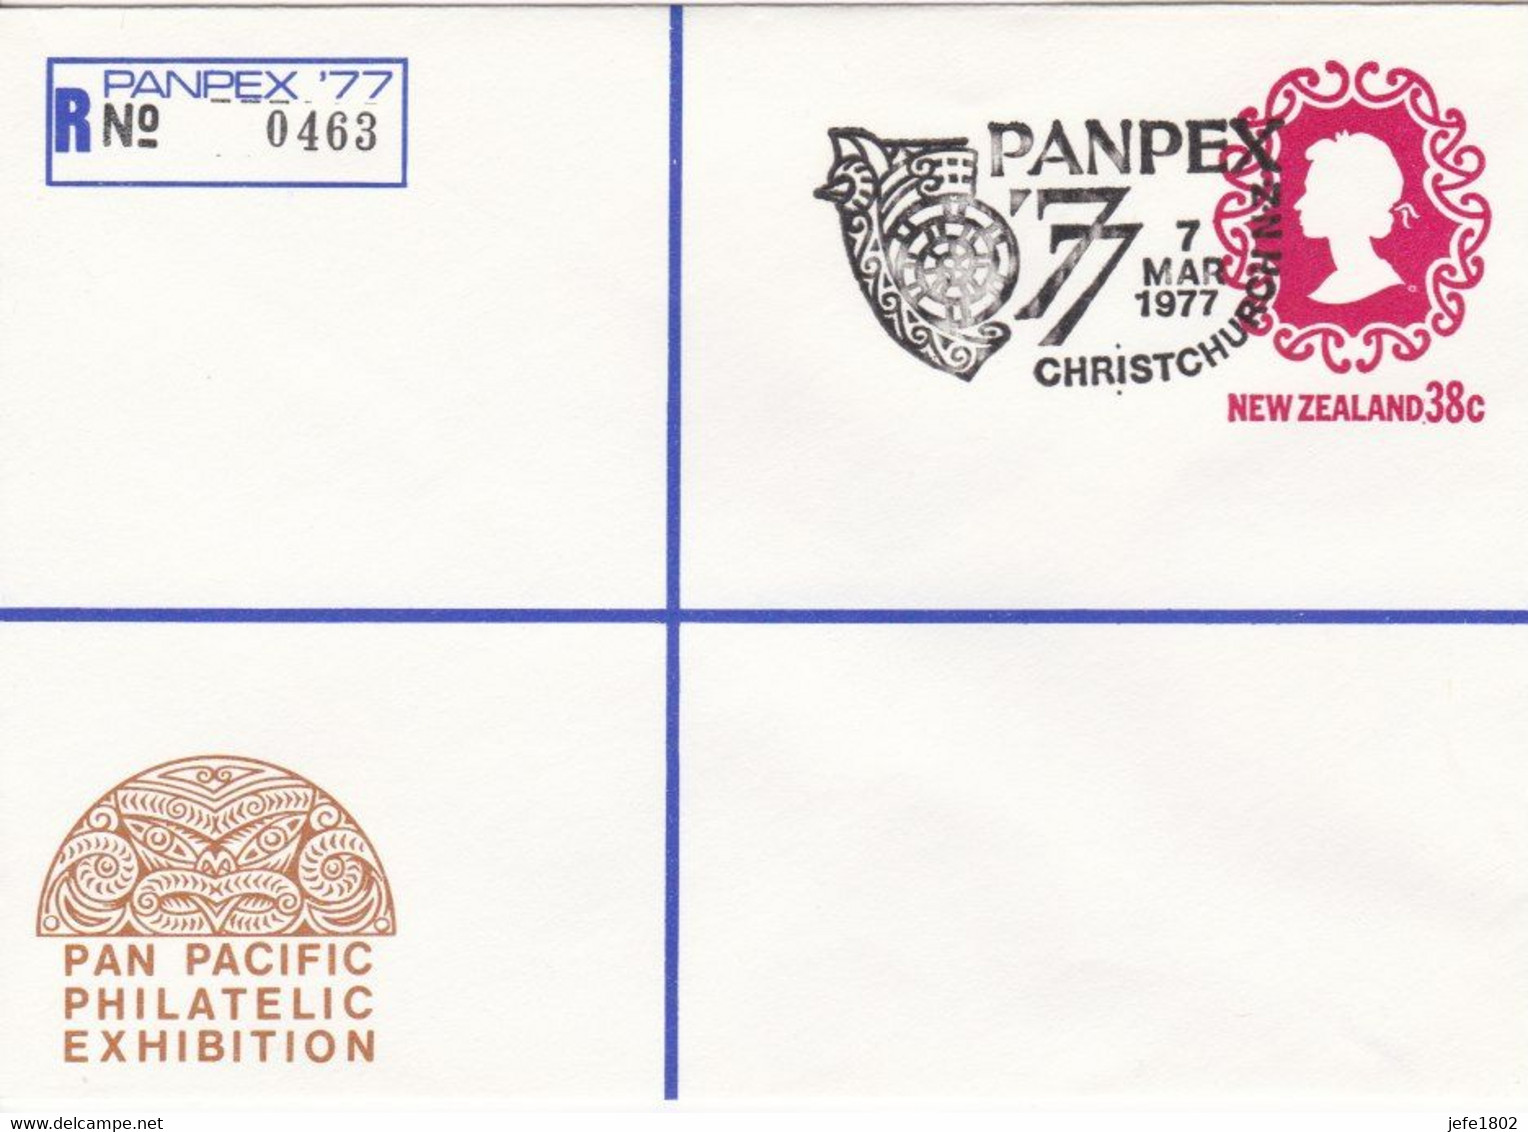 Registered Letter PANPEX '77 - N° 0463 - TAI-IHU Figure-head Of Maori War Canoe  - 7 Mar 1977 - Postal Stationery